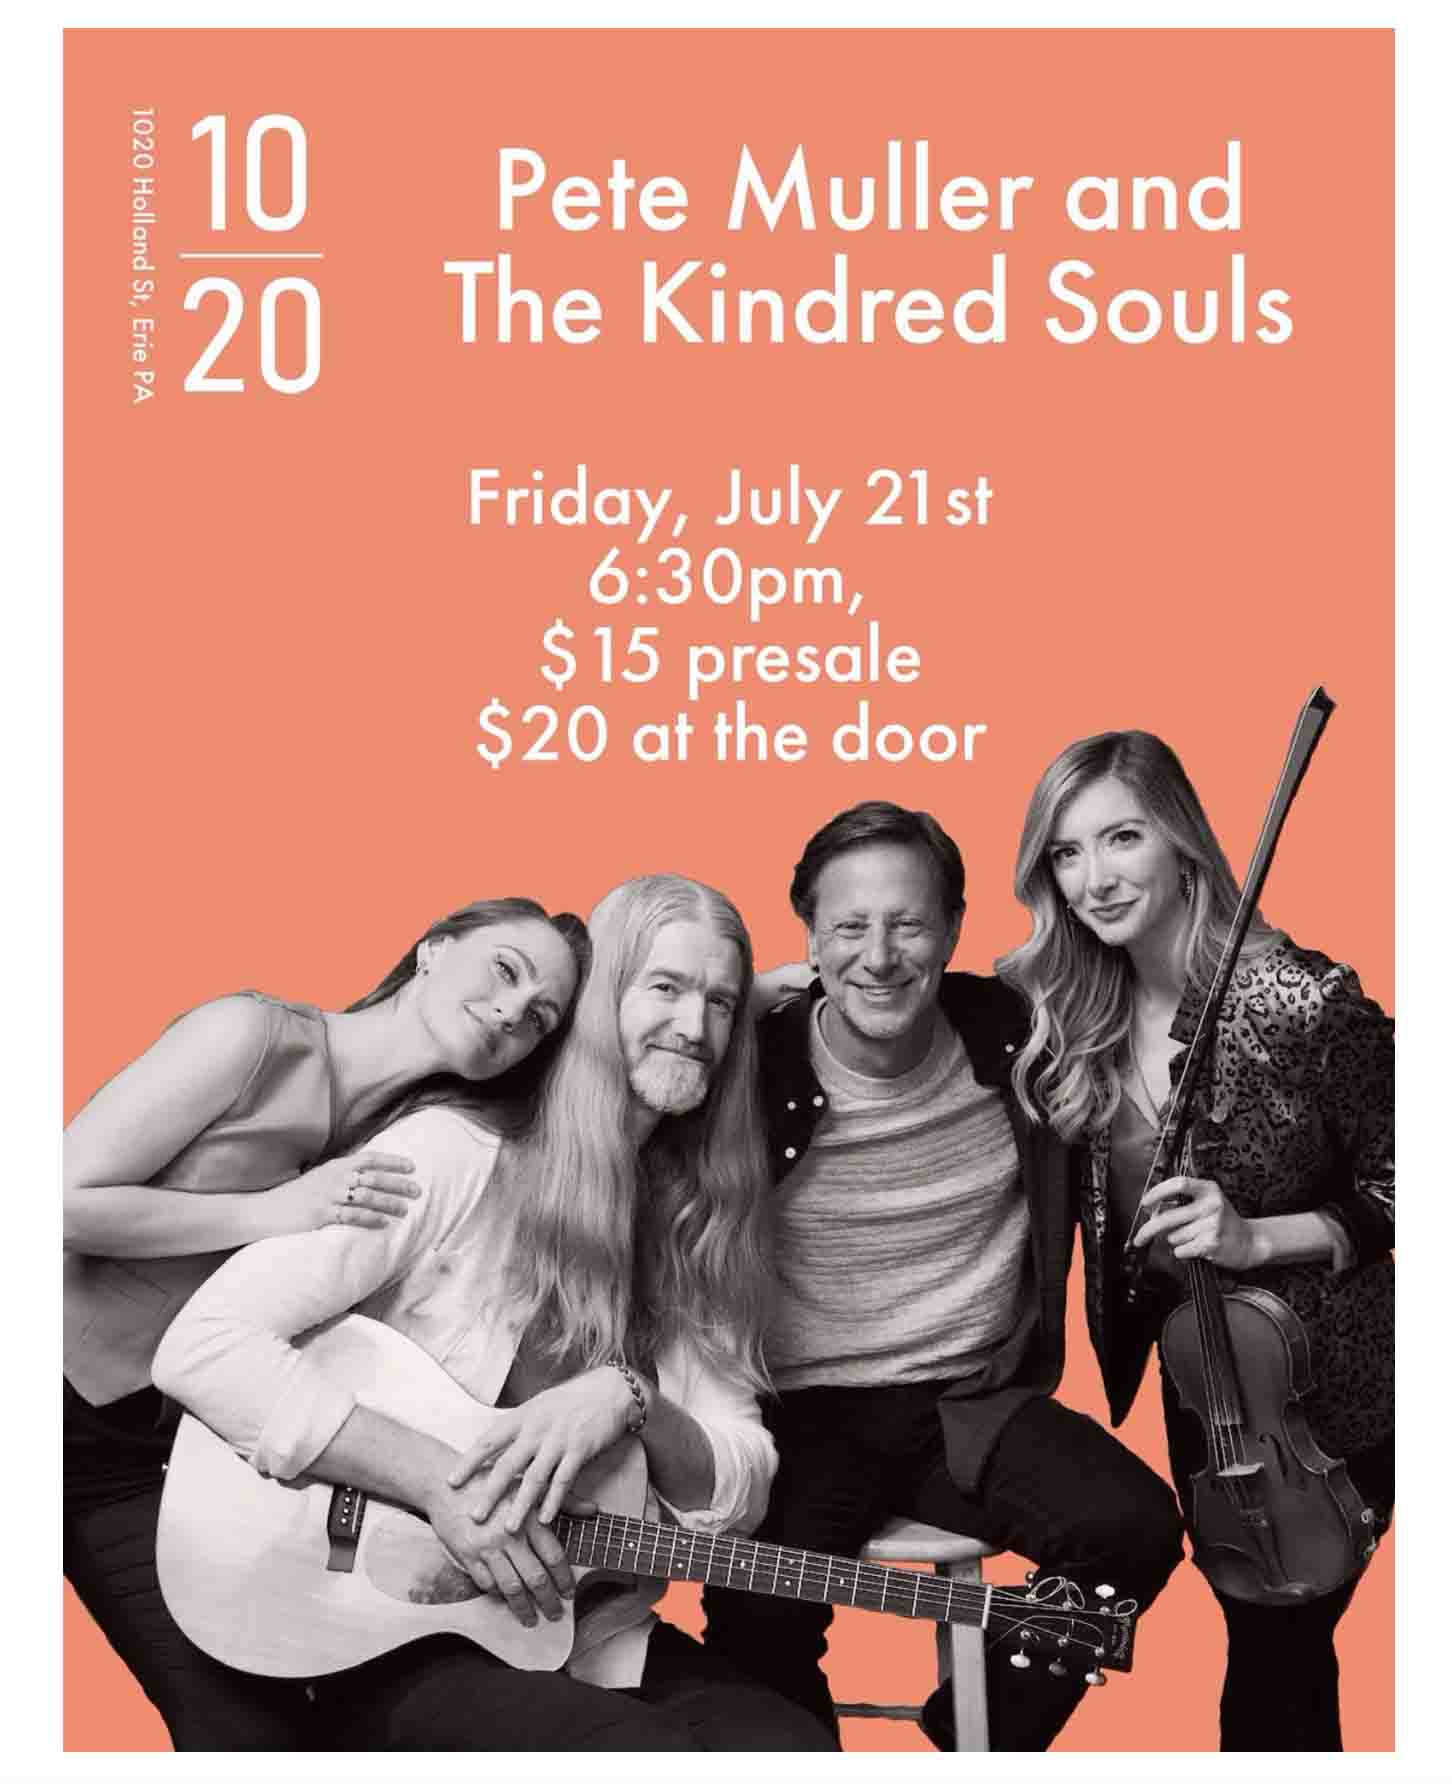 The Kindred Souls Concert